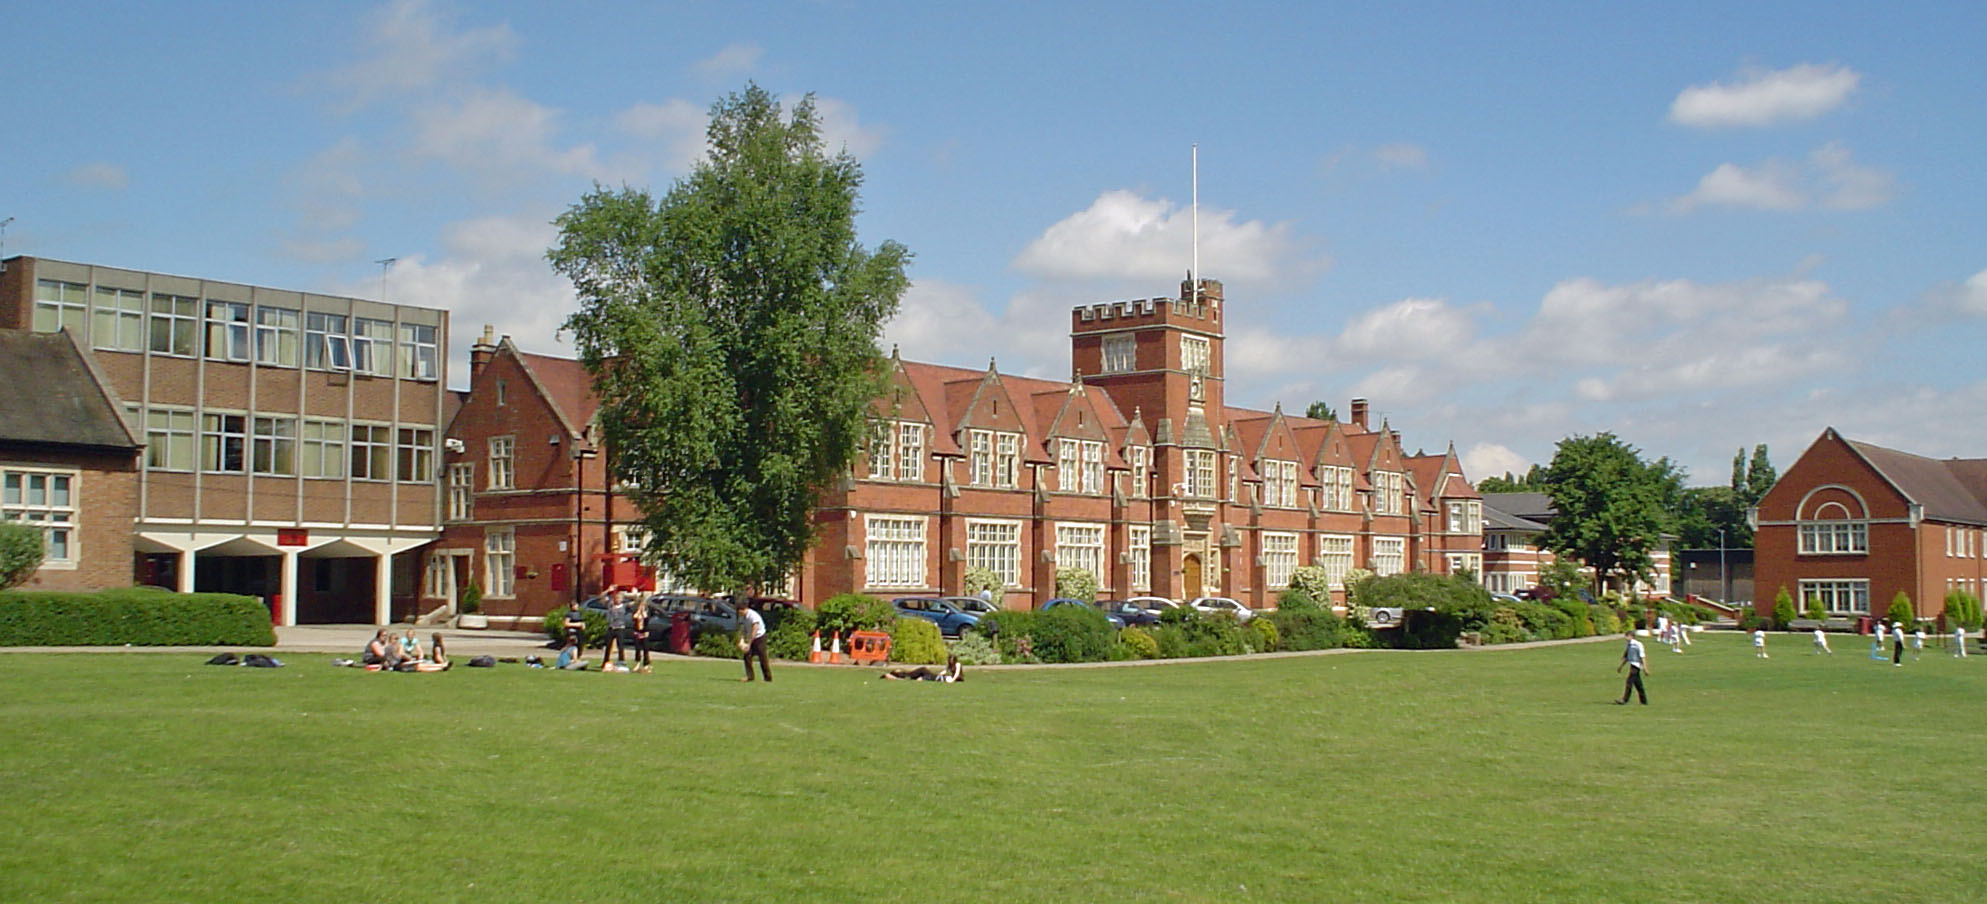 State school in britain